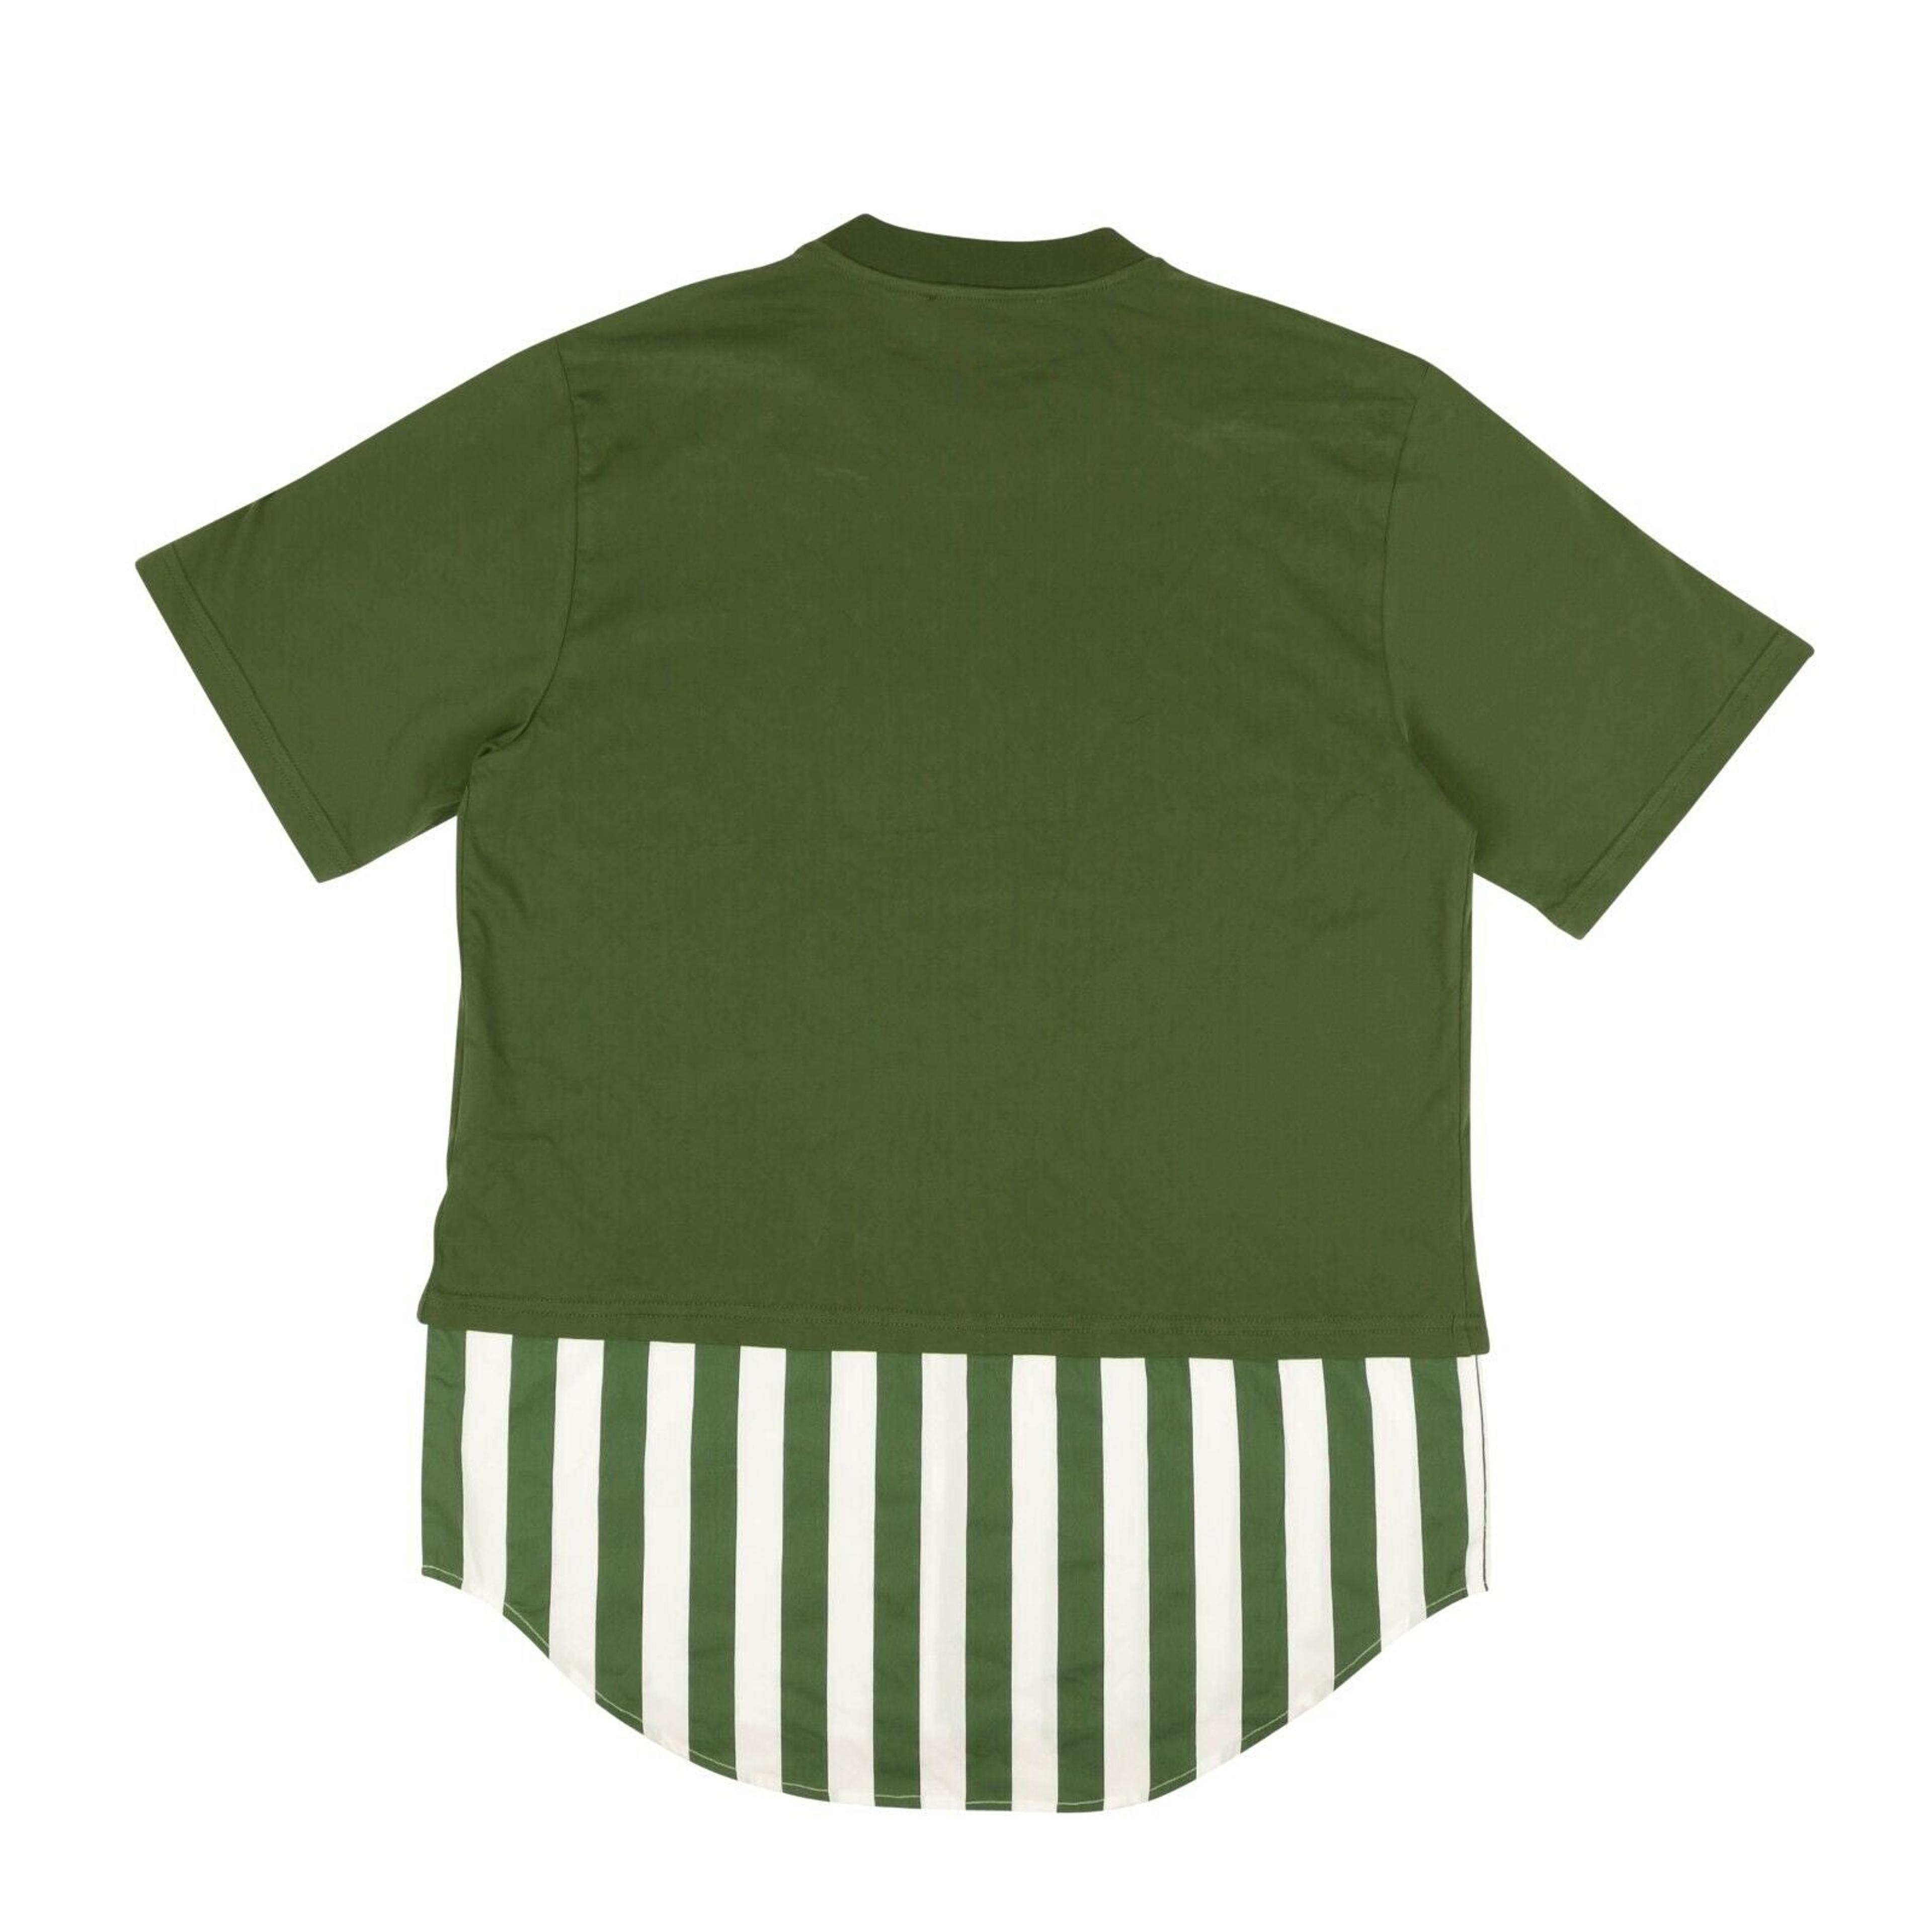 Alternate View 2 of Men'S T-Shirts - Green/White